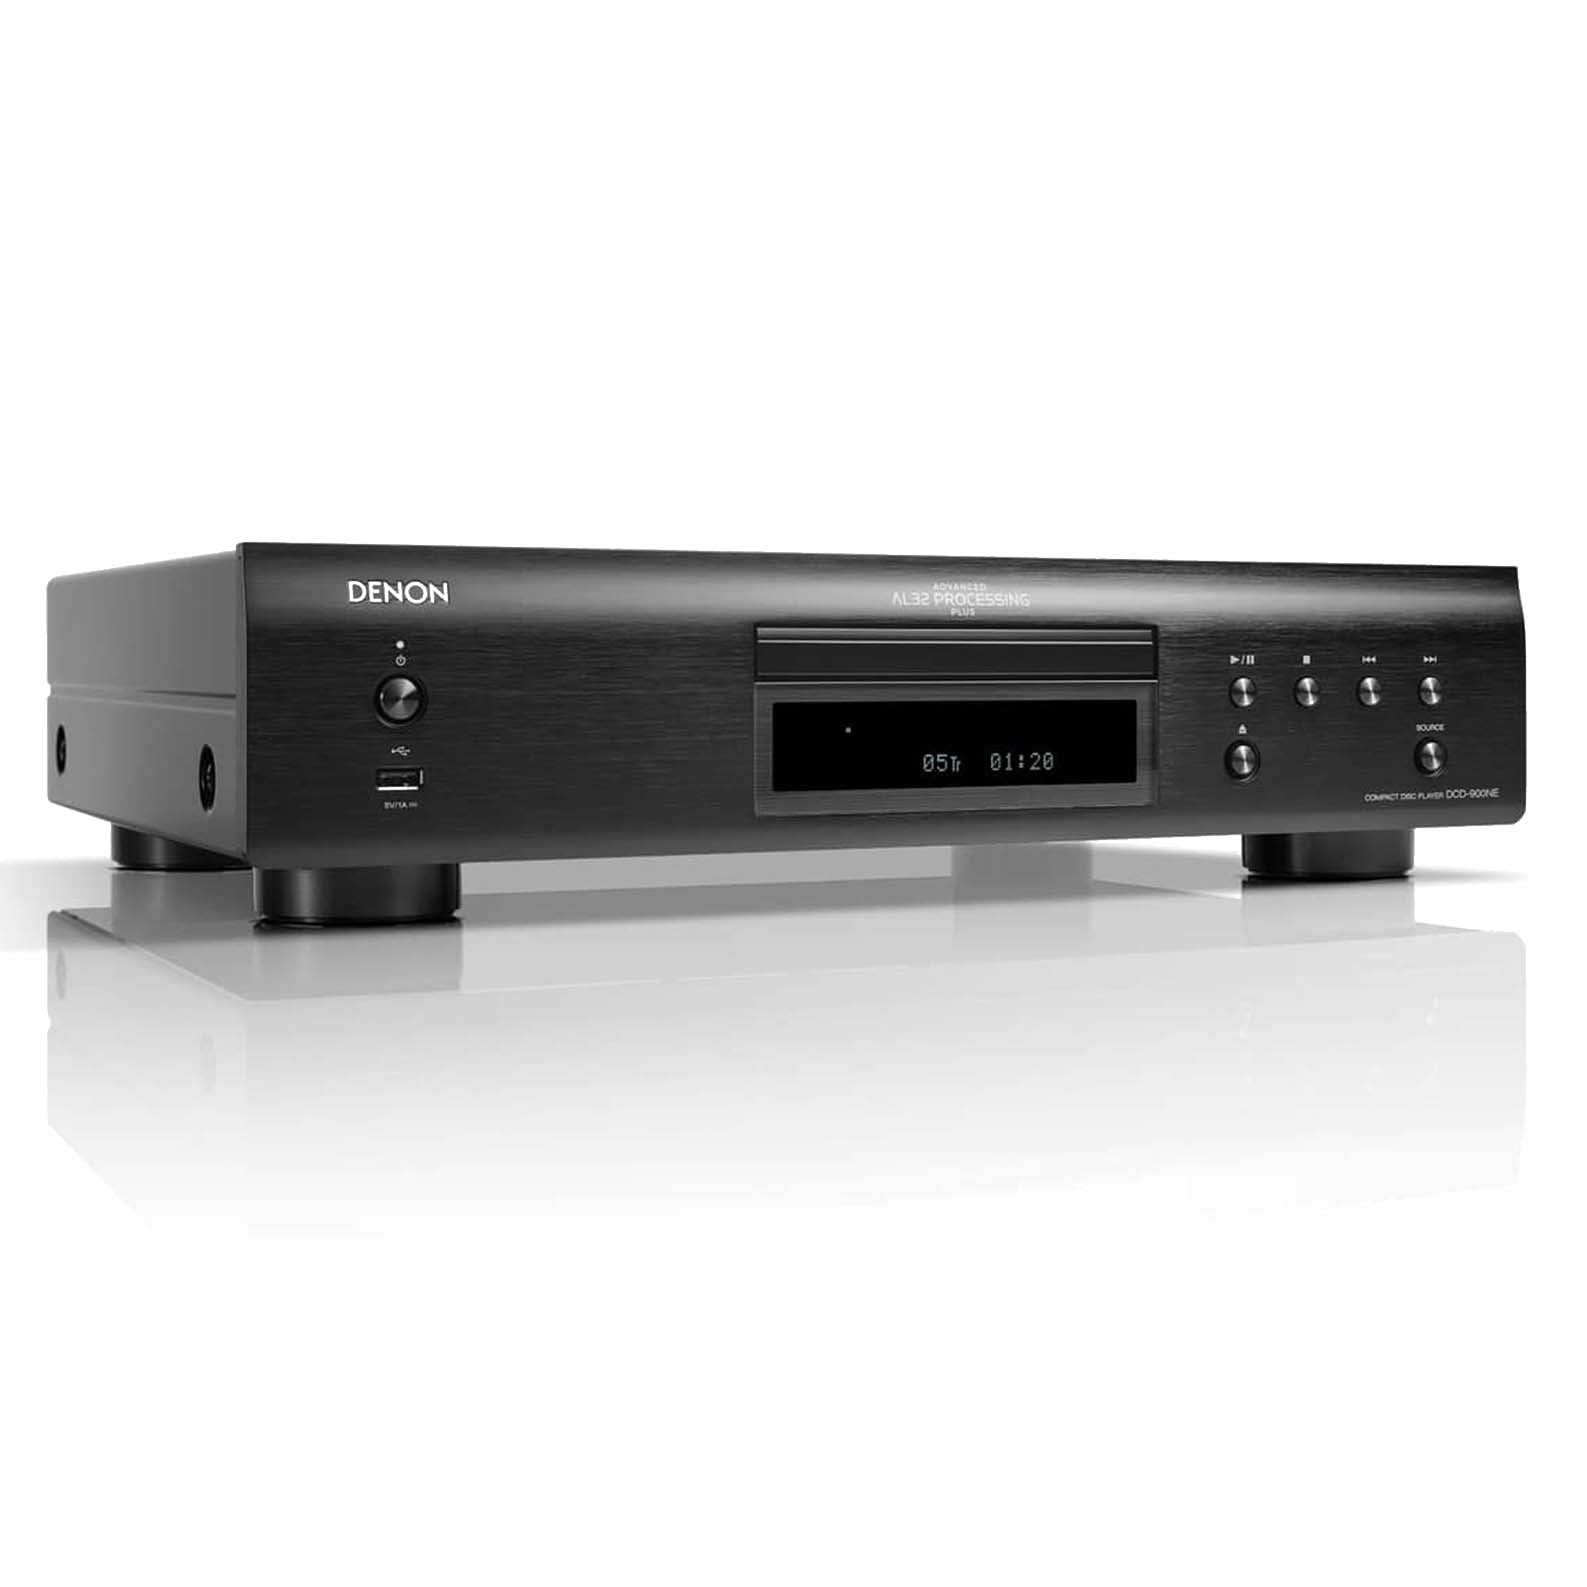 Denon DCD-900NE CD Player / Network Audio Player - Silver